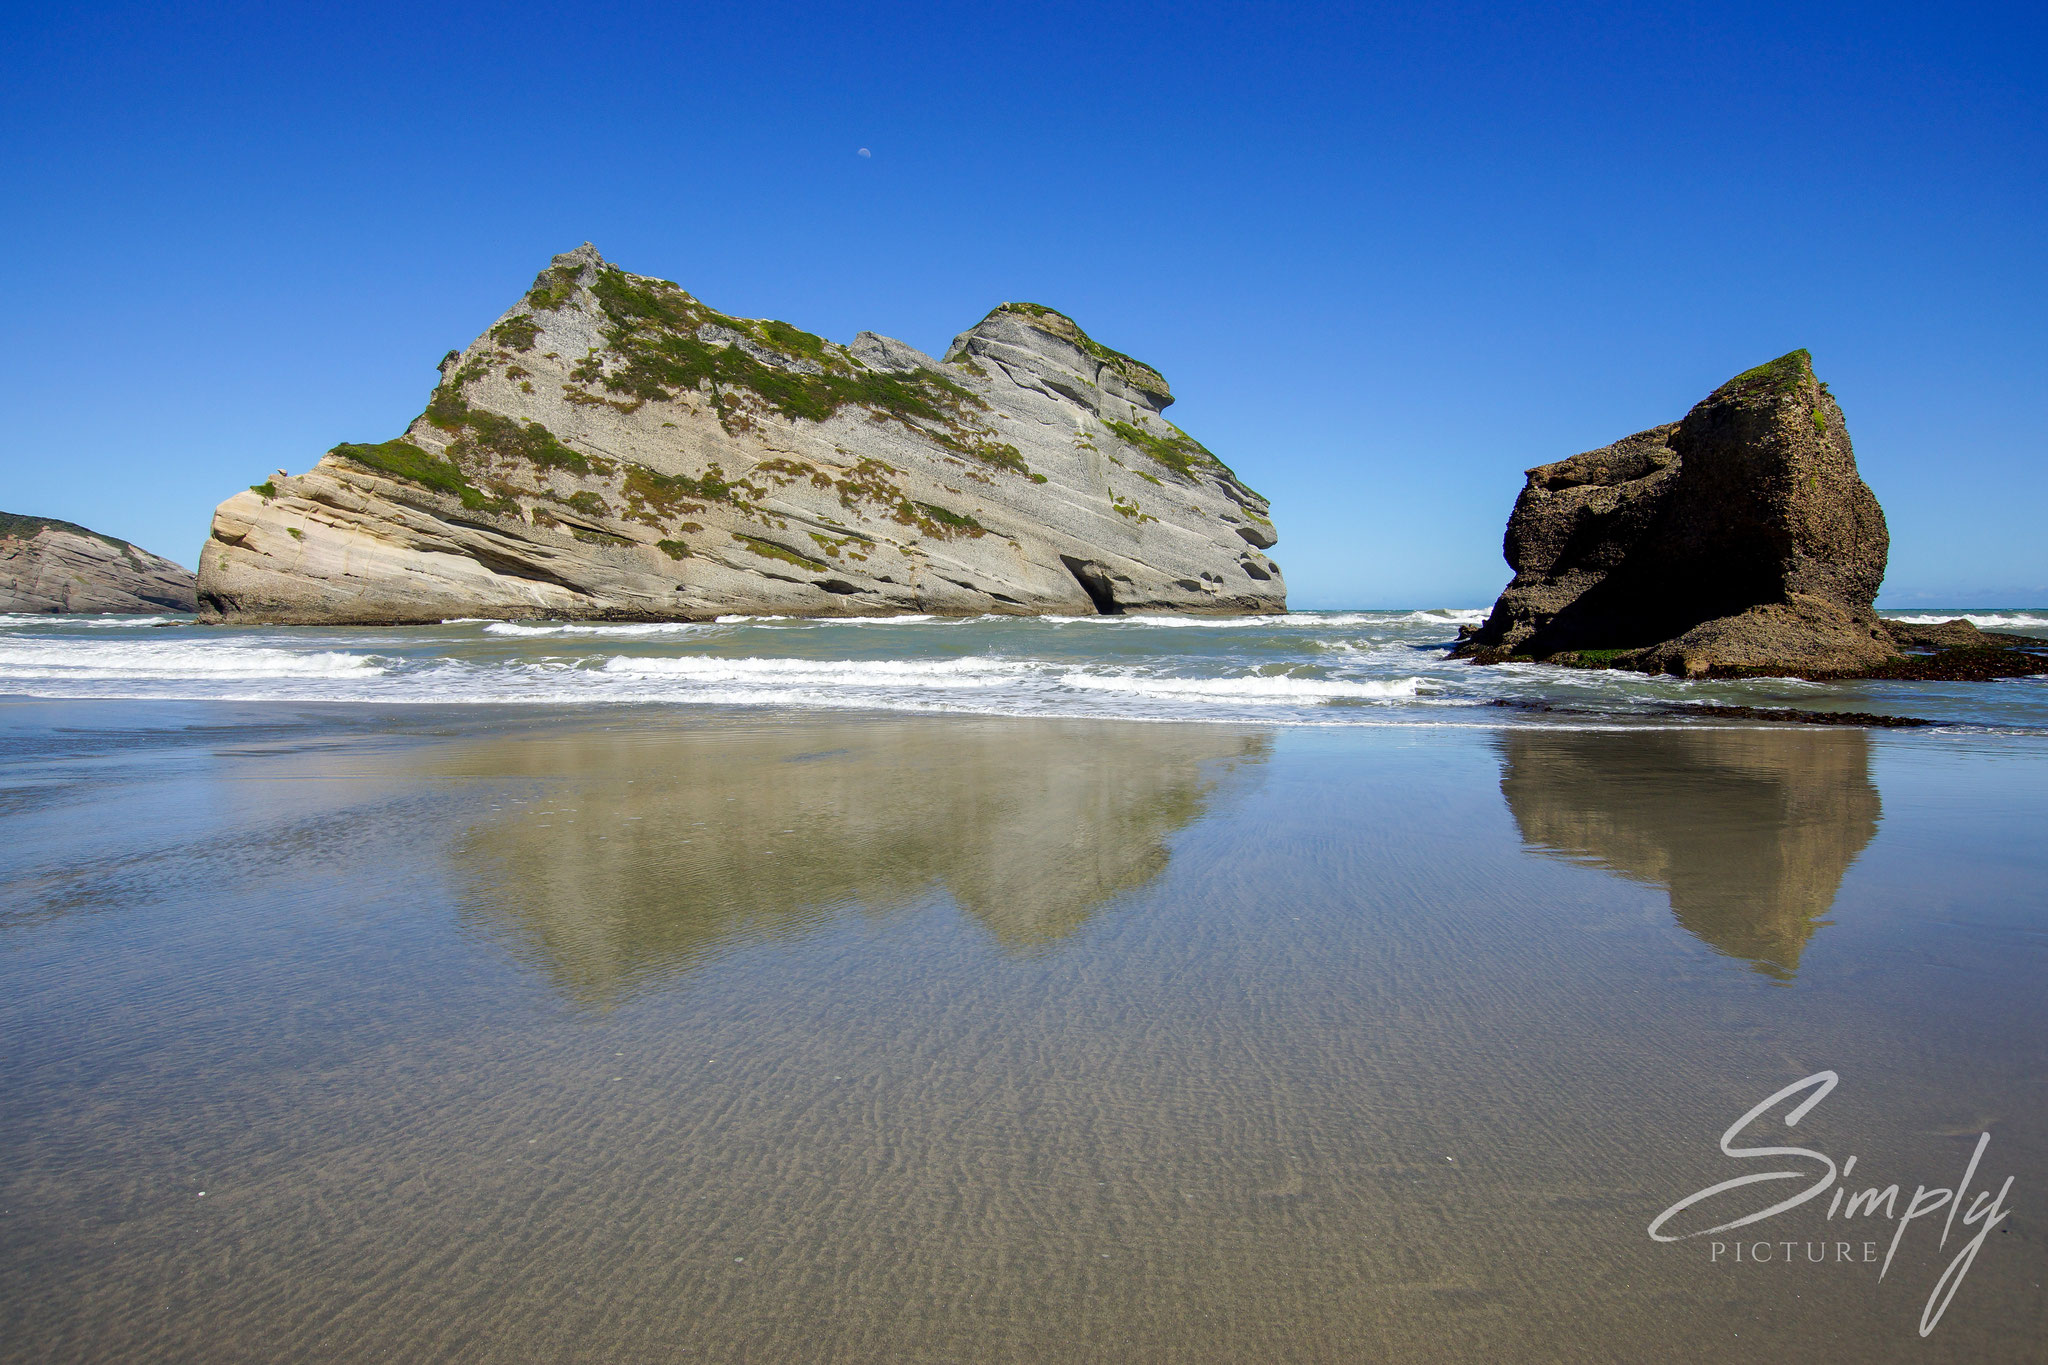 Puponga, Wharariki Beach, Strand mit einzelnen grossen Felsen im Meer